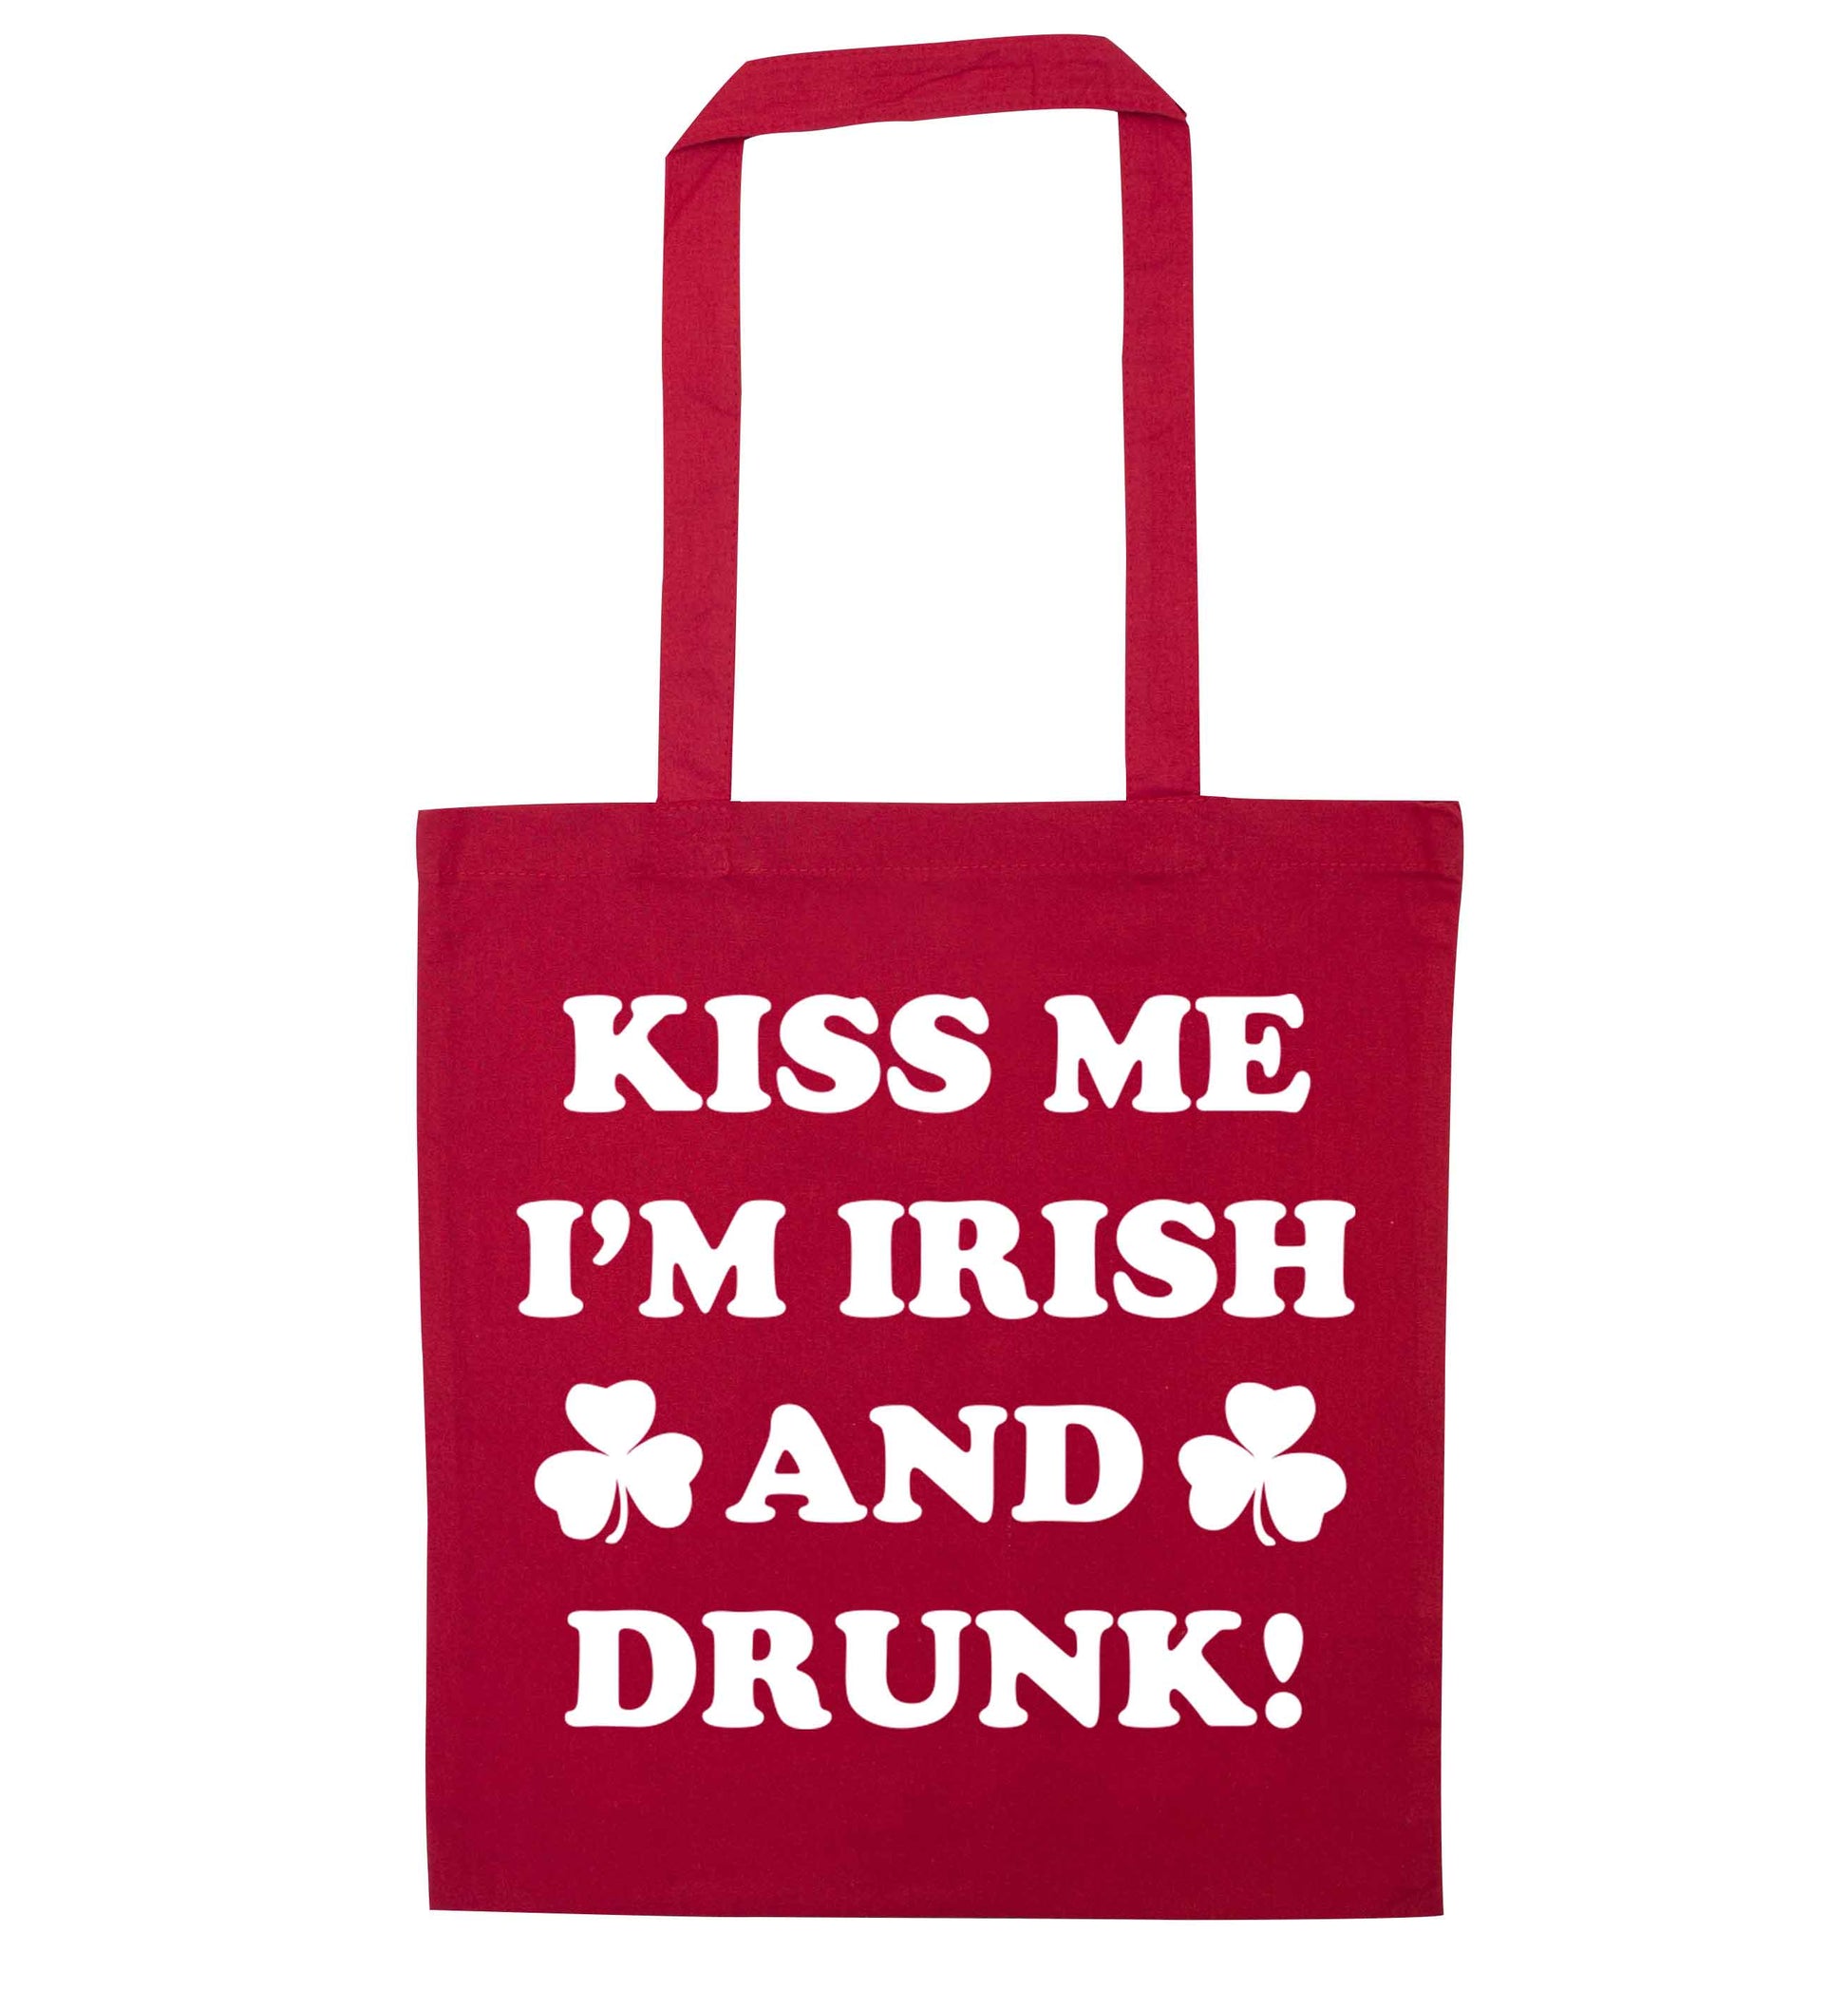 Kiss me I'm Irish and drunk red tote bag